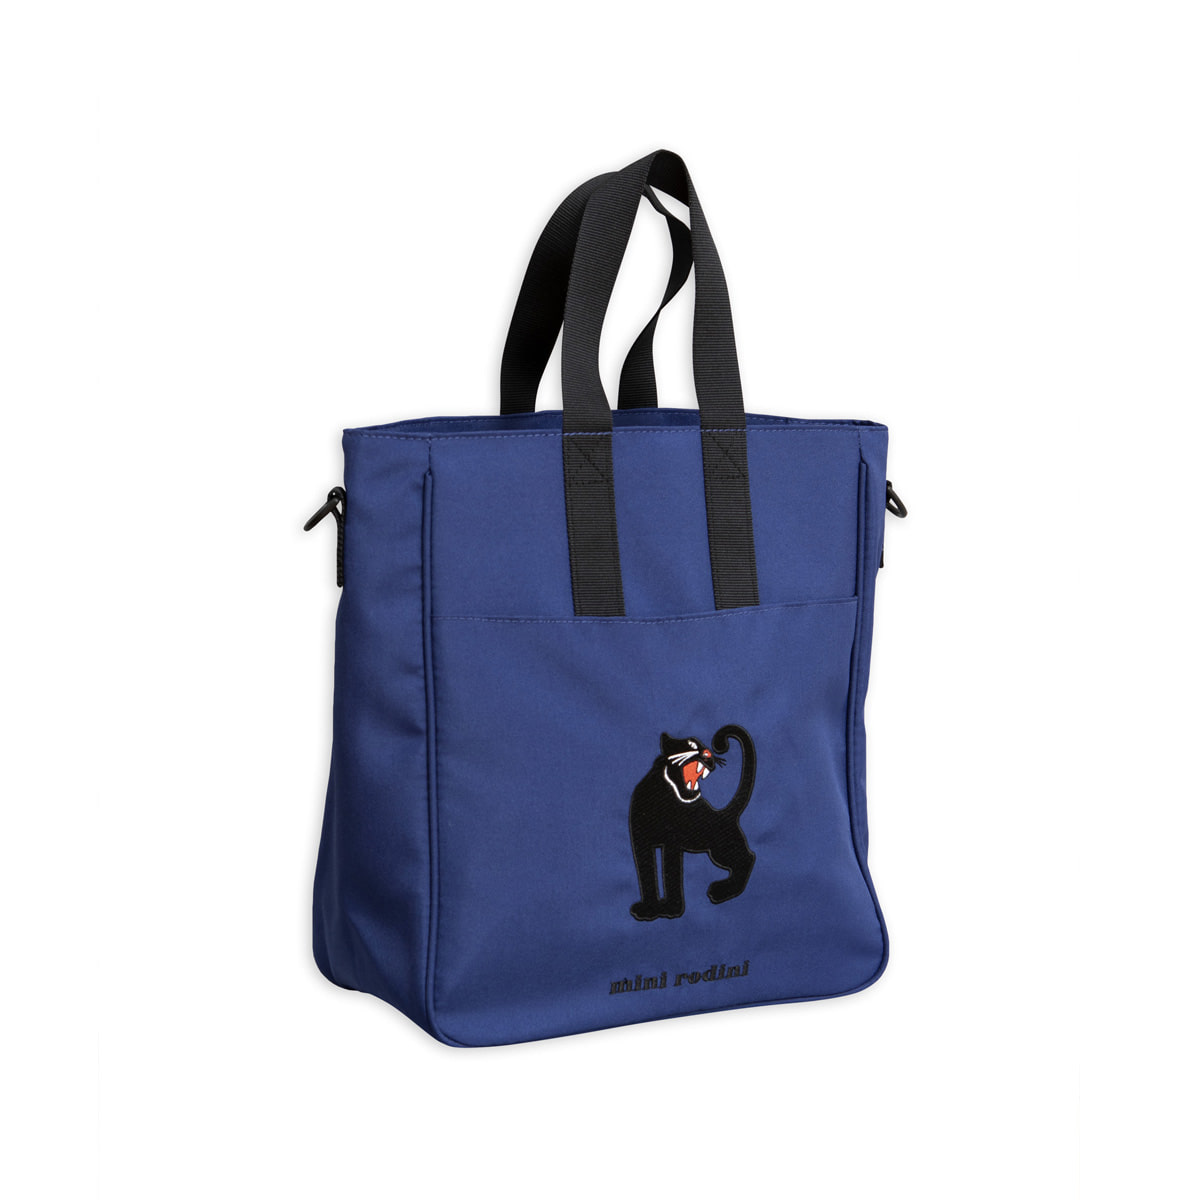 Panther gym bag [Blue]